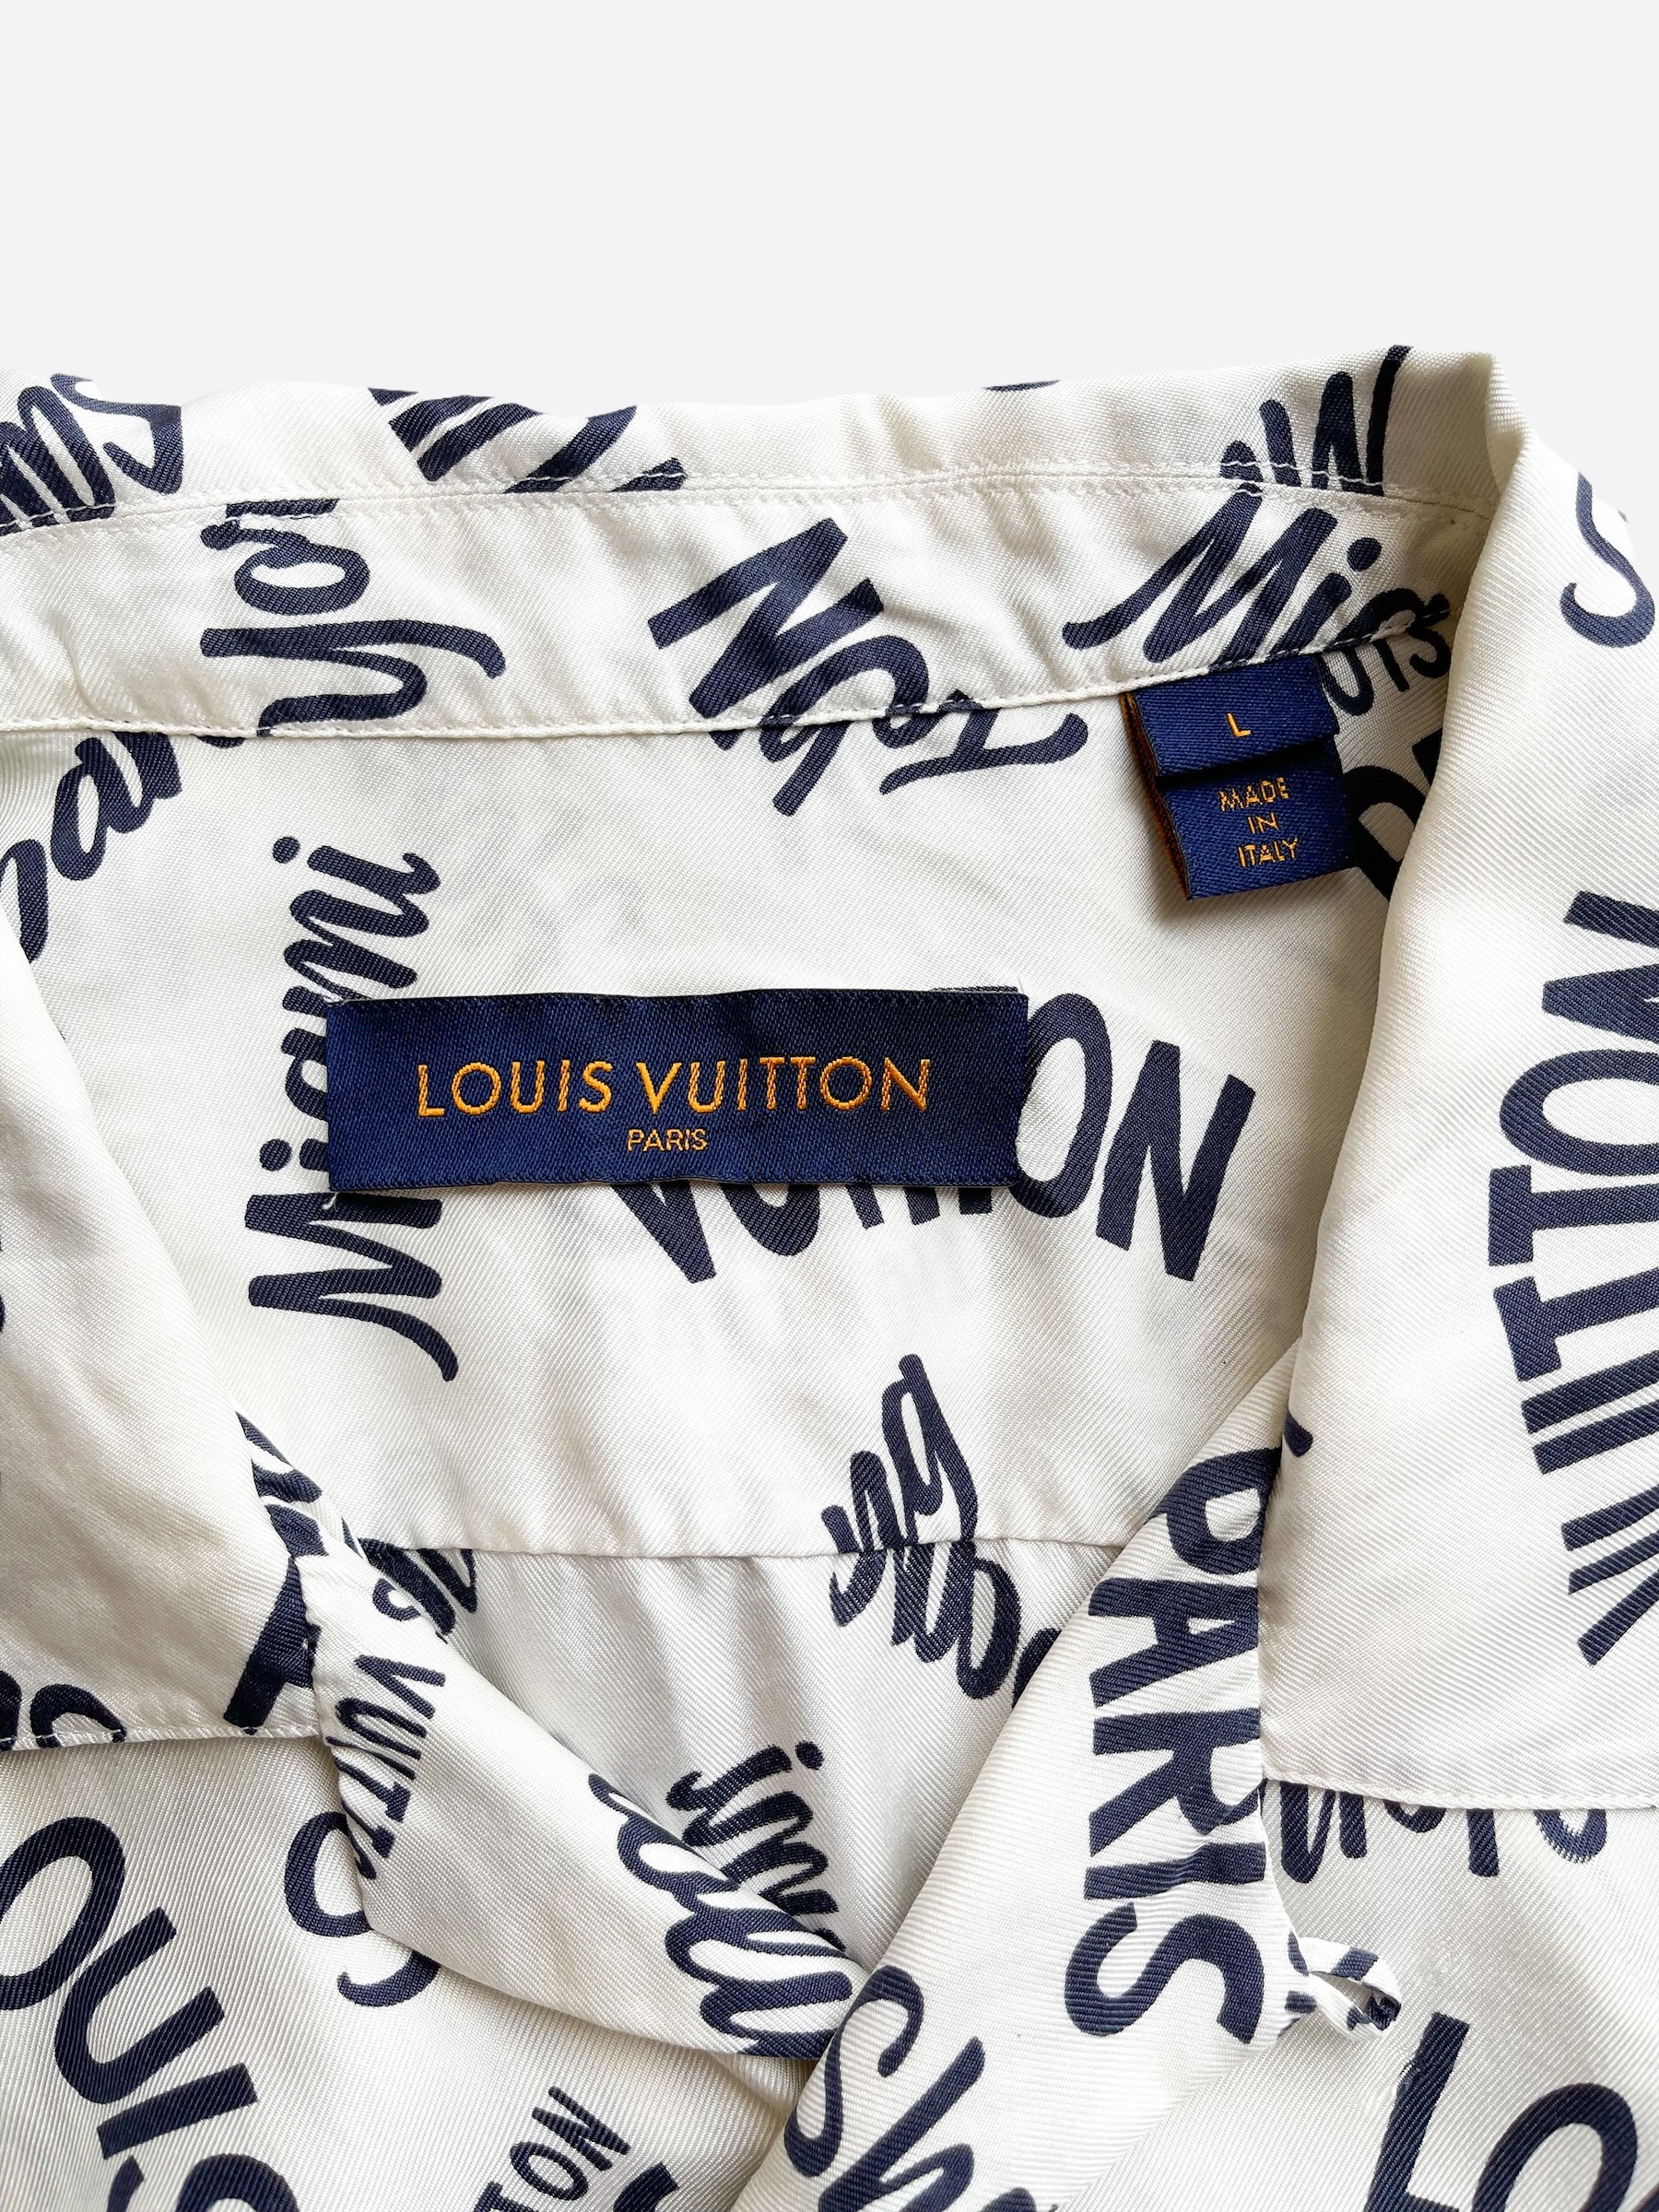 Sold at Auction: Louis Vuitton, a white silk shirt